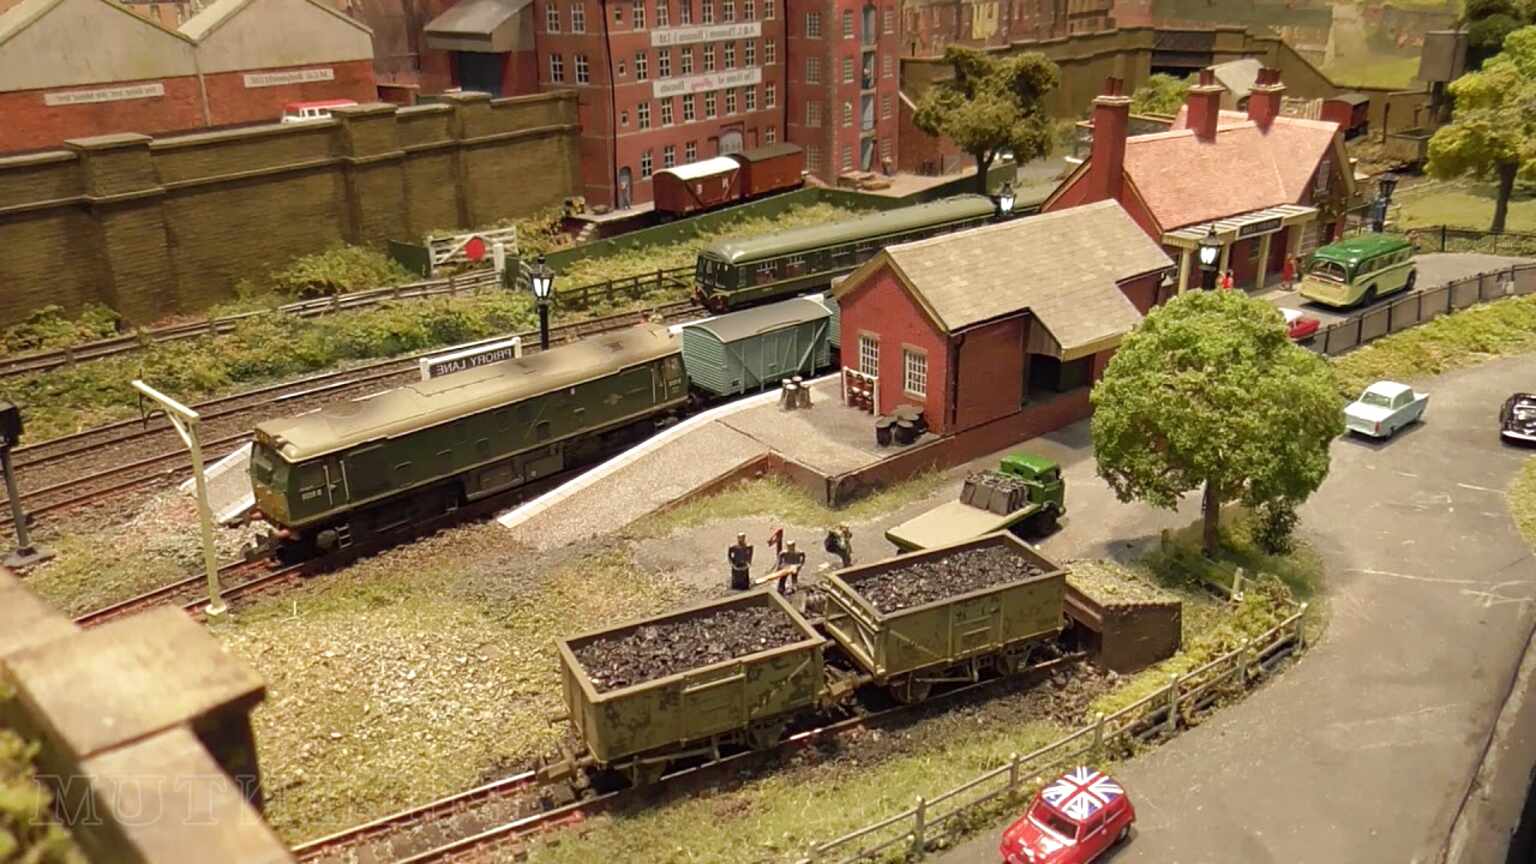 model railway layouts for sale on gumtree